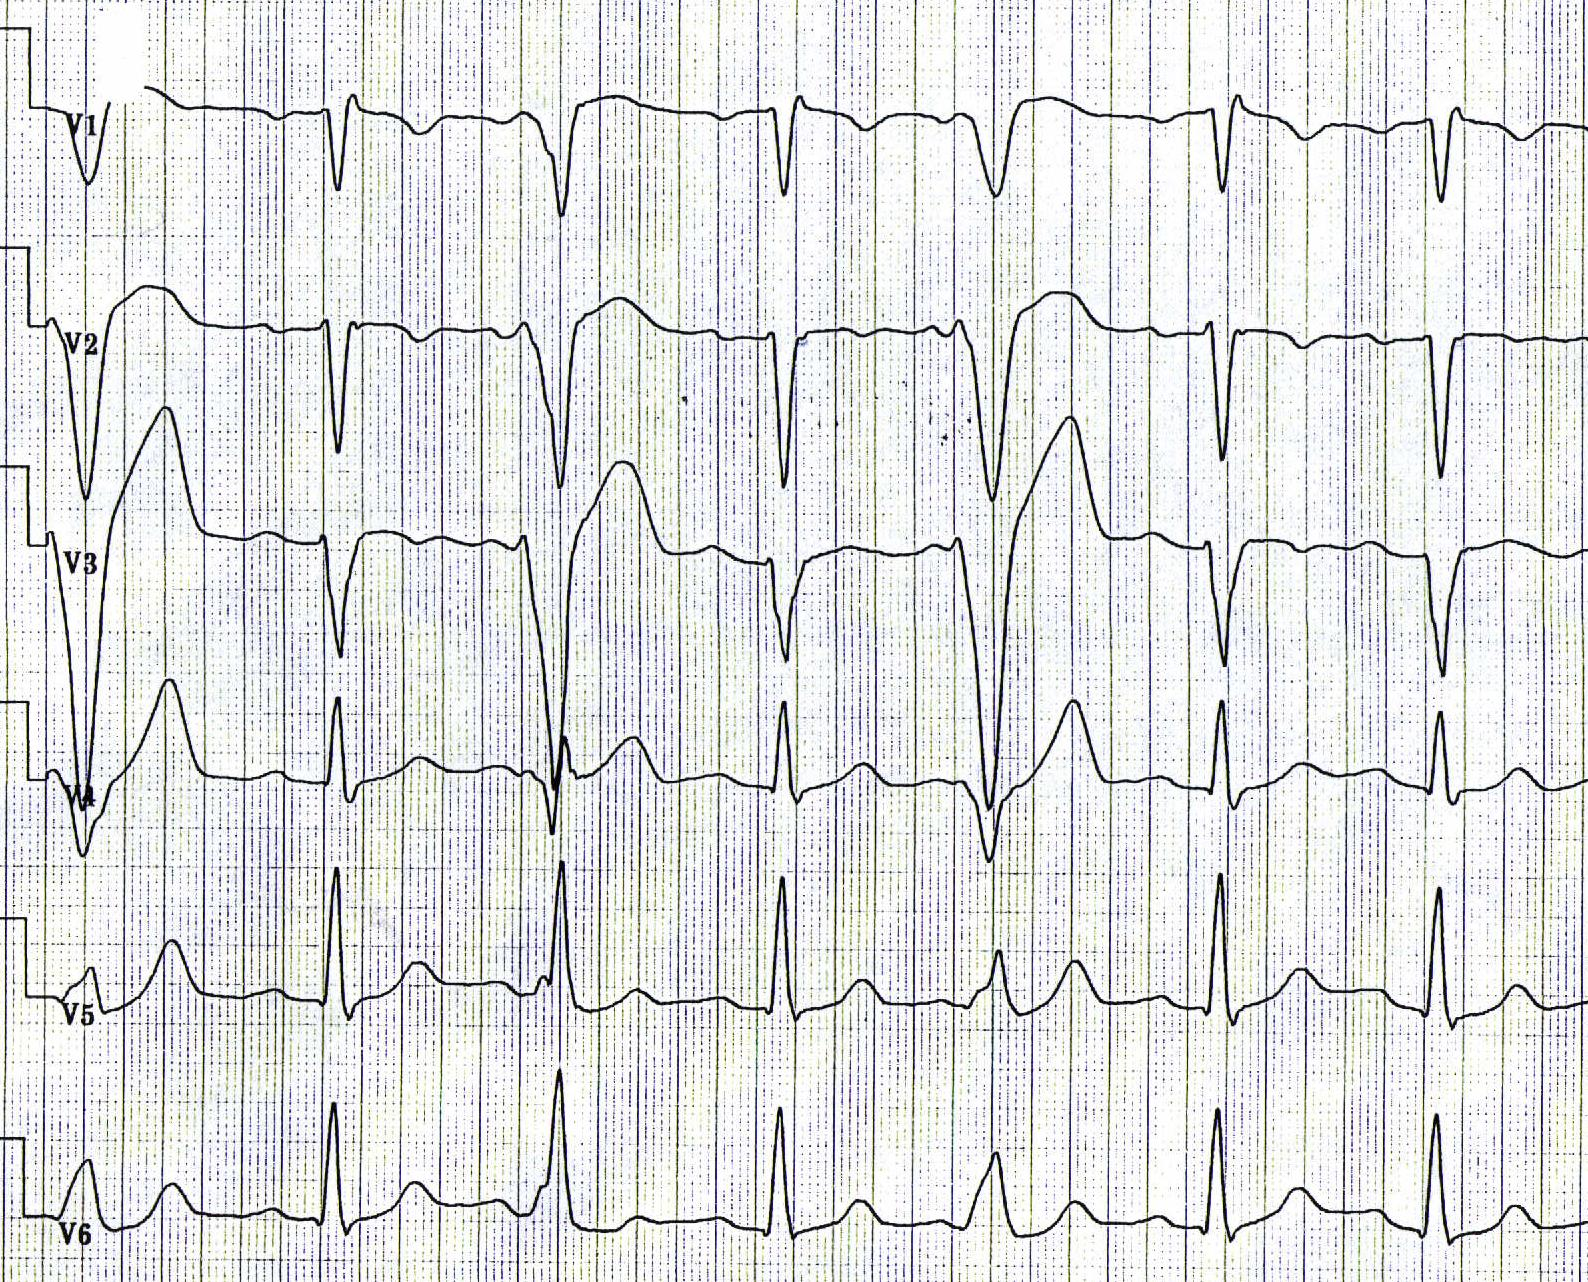 Ruhe-EKG mit 50 mm/sec QRS 110 ms in V1 Epsilonpotential T